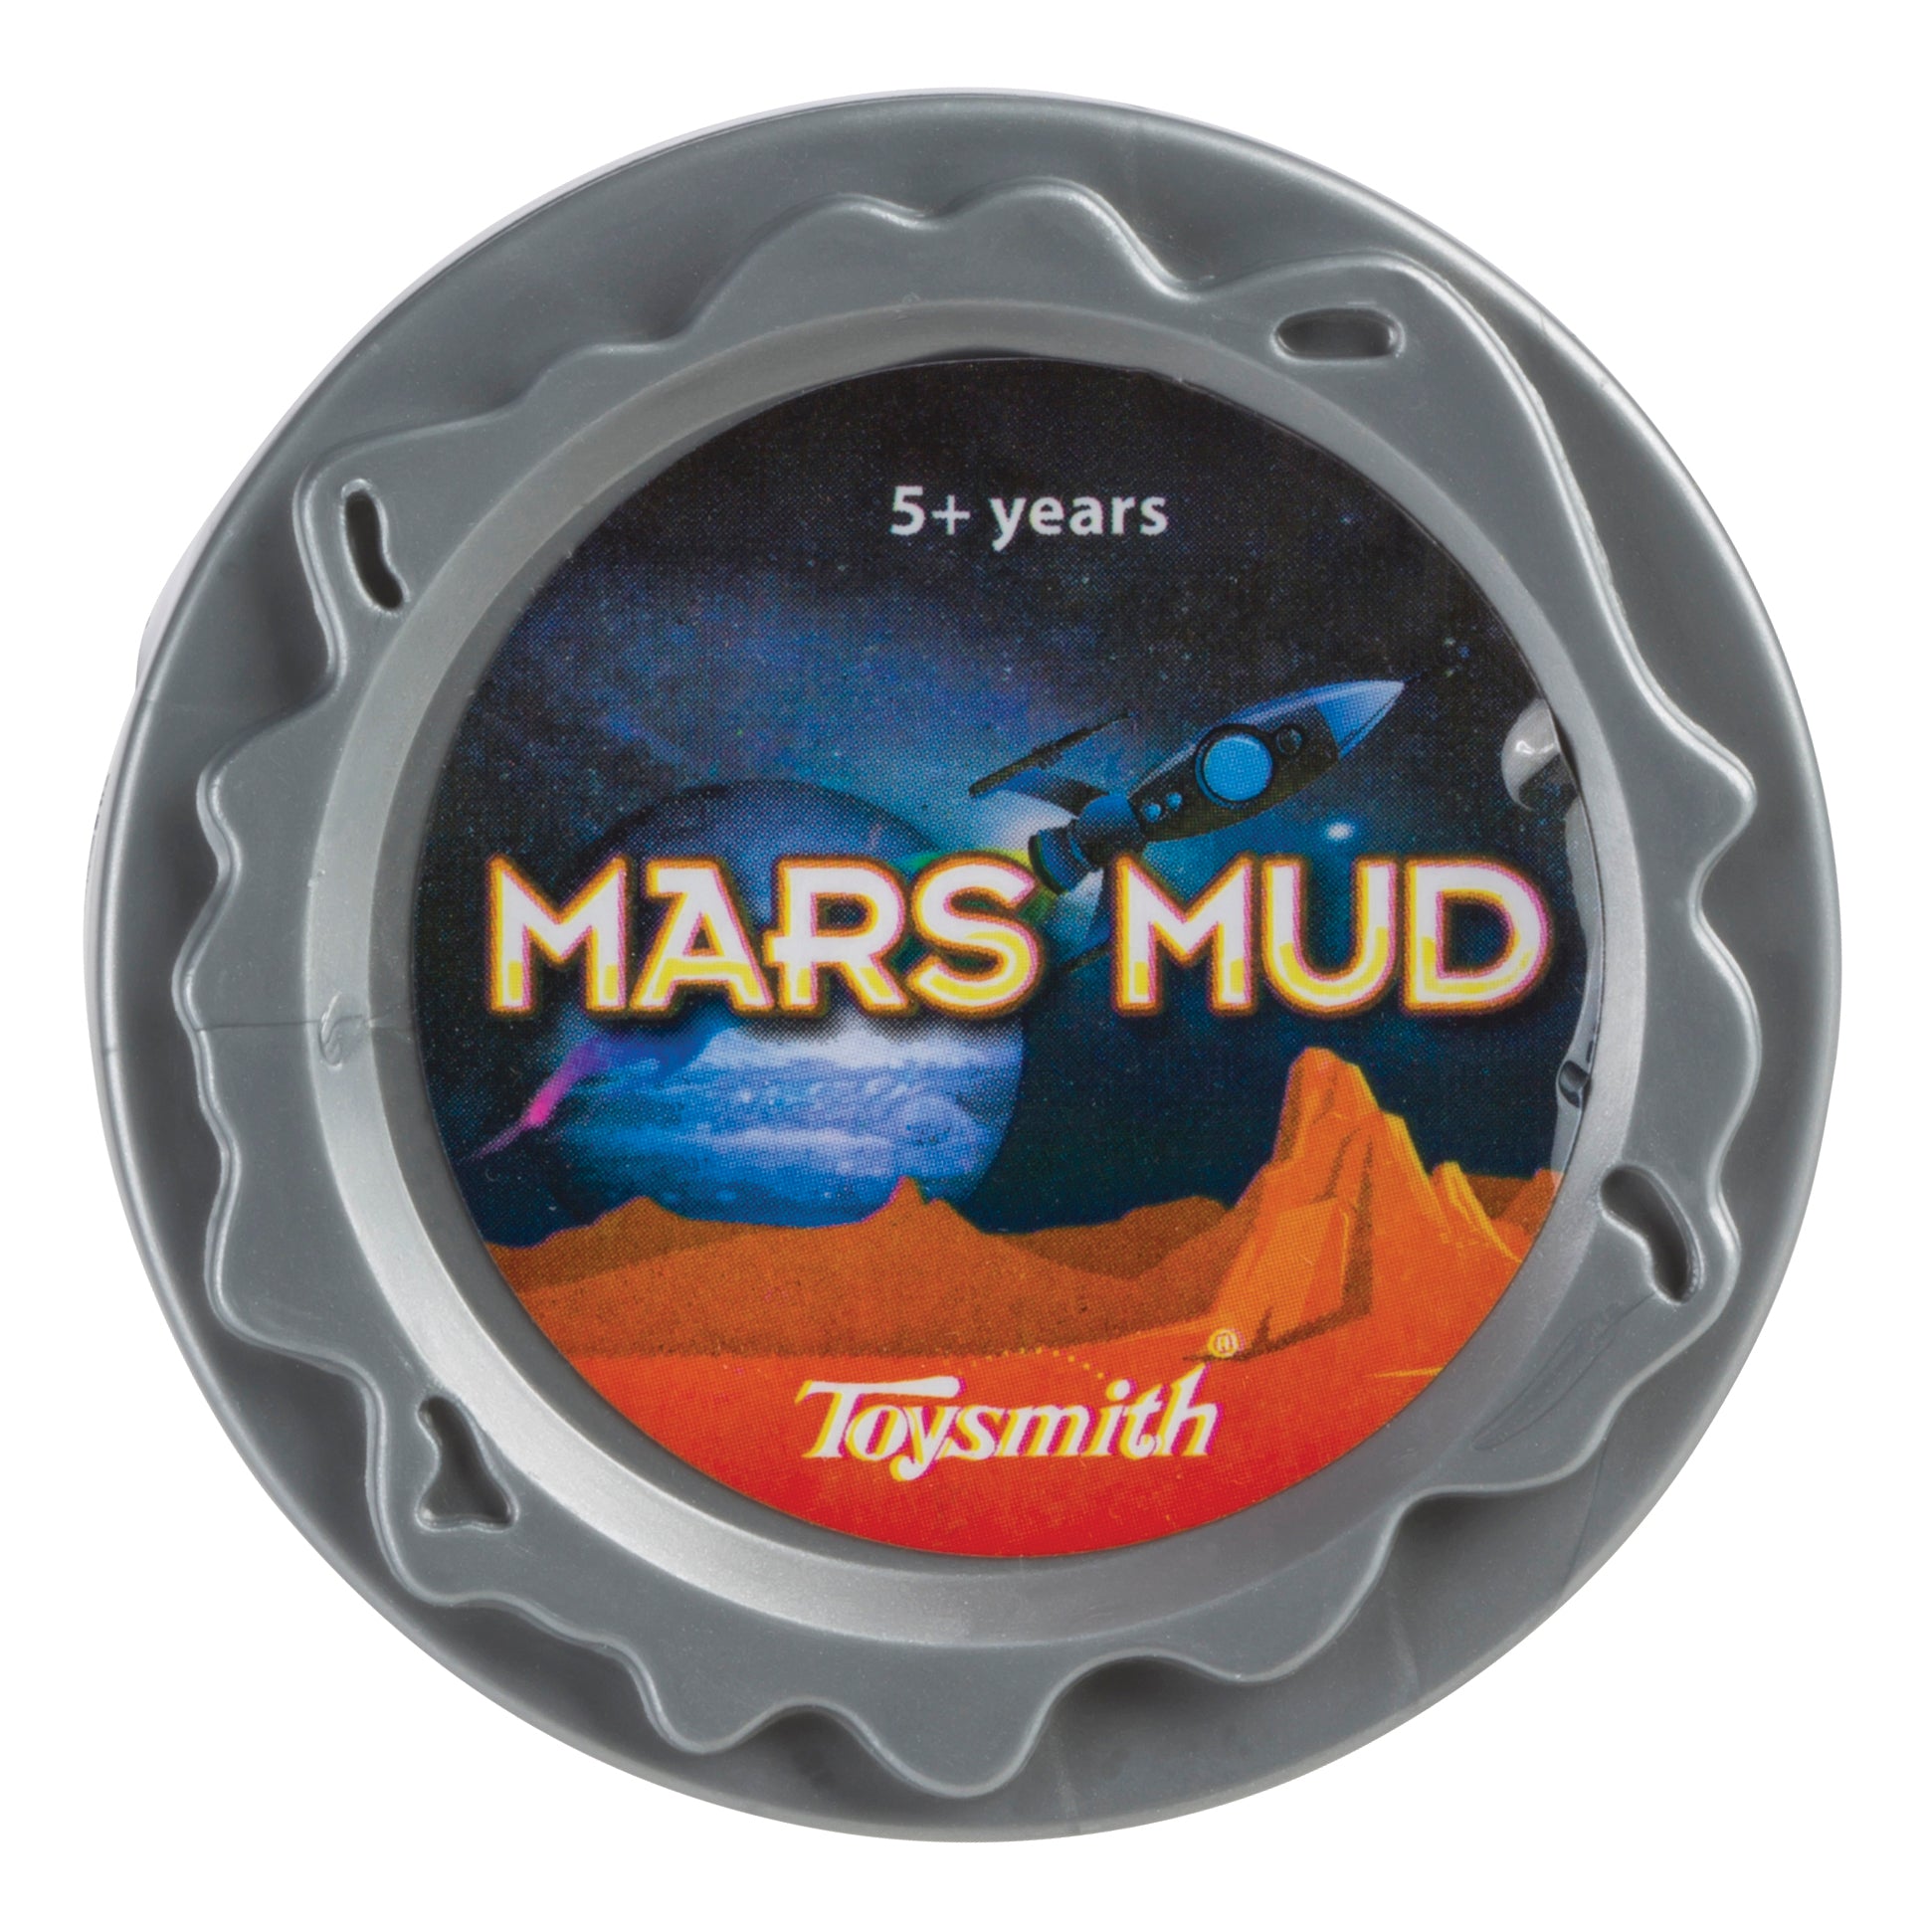 Toysmith Mars Mud